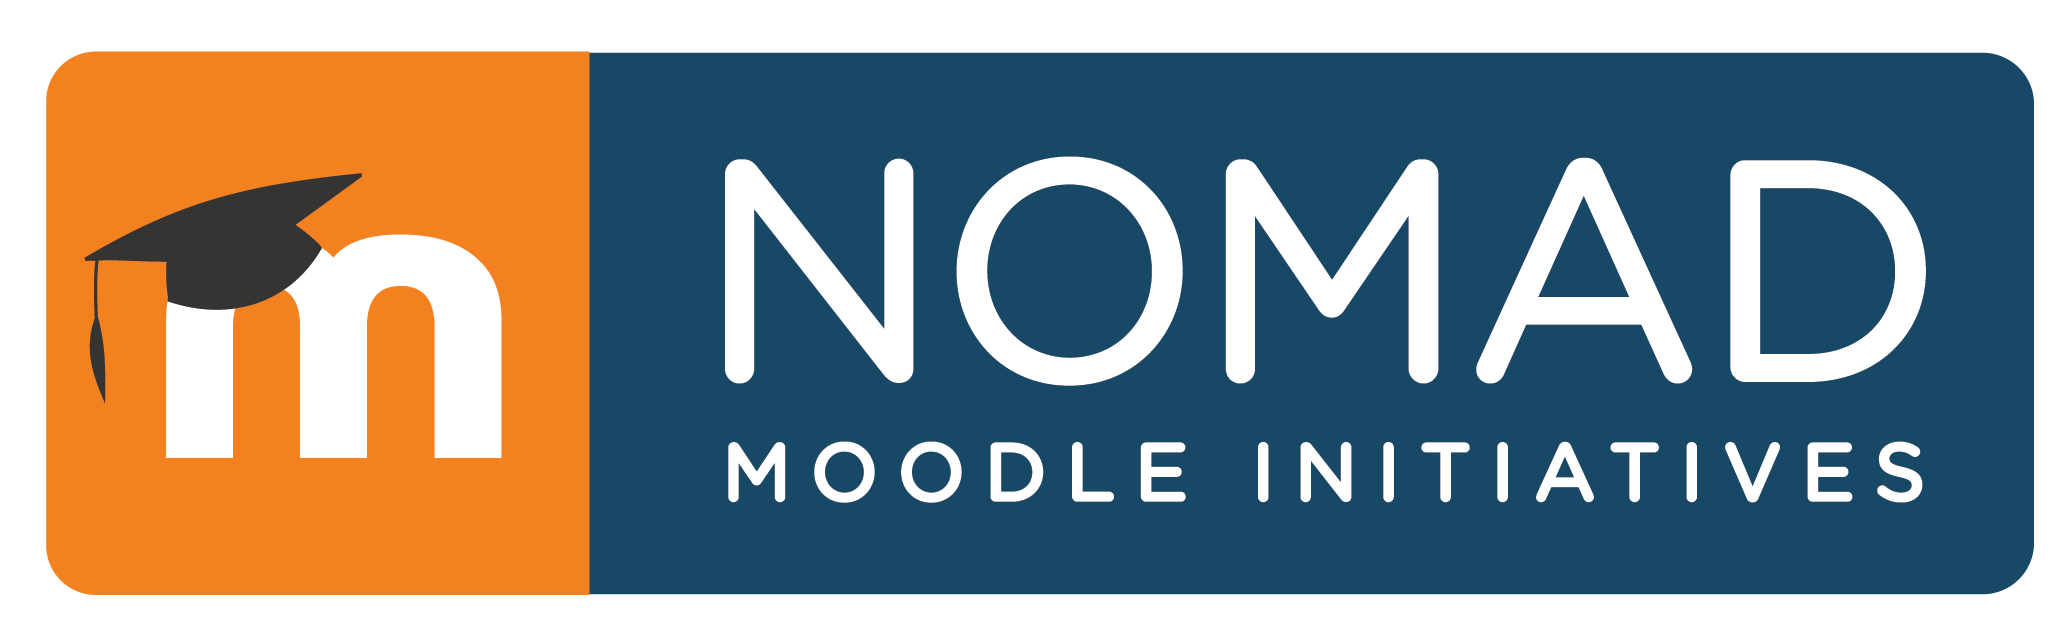 NomadMoodleIniziative Logo primario CMYK